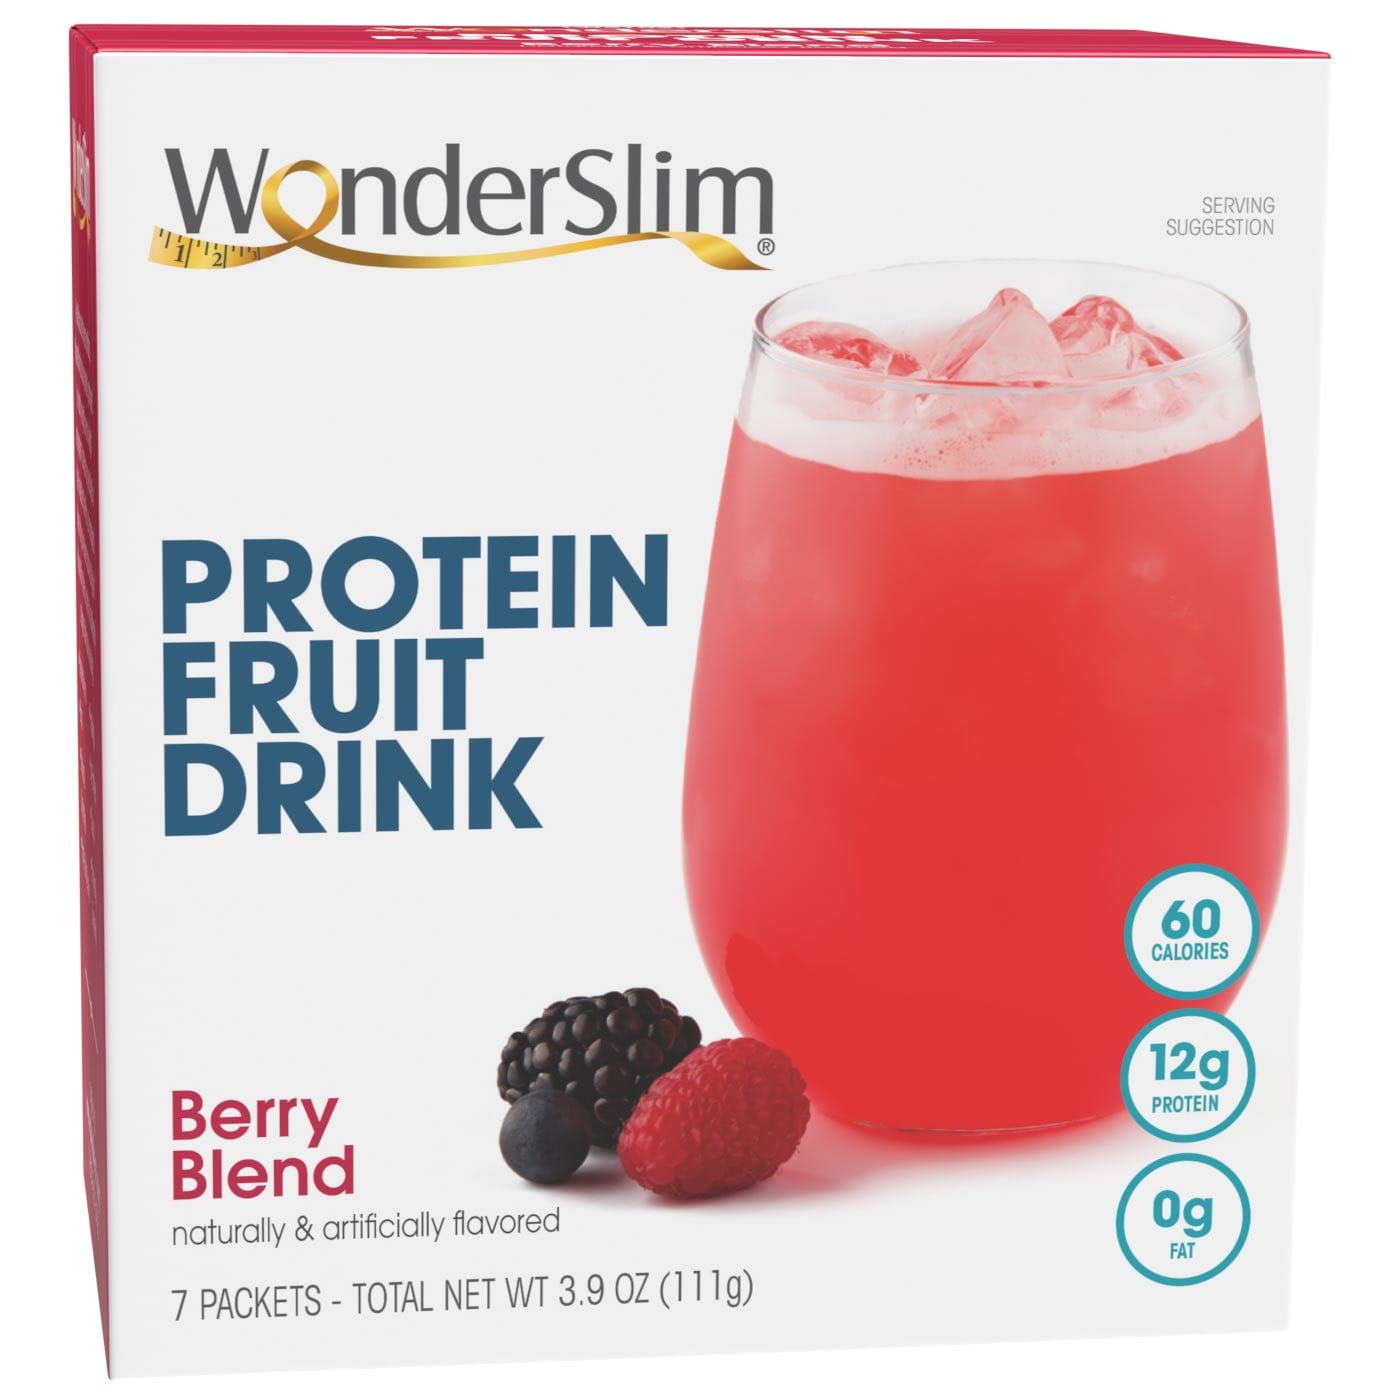 Activia Strawberry and Blueberry Probiotic Yogurt, Lowfat Yogurt Cups, 4  oz, 12 Count 